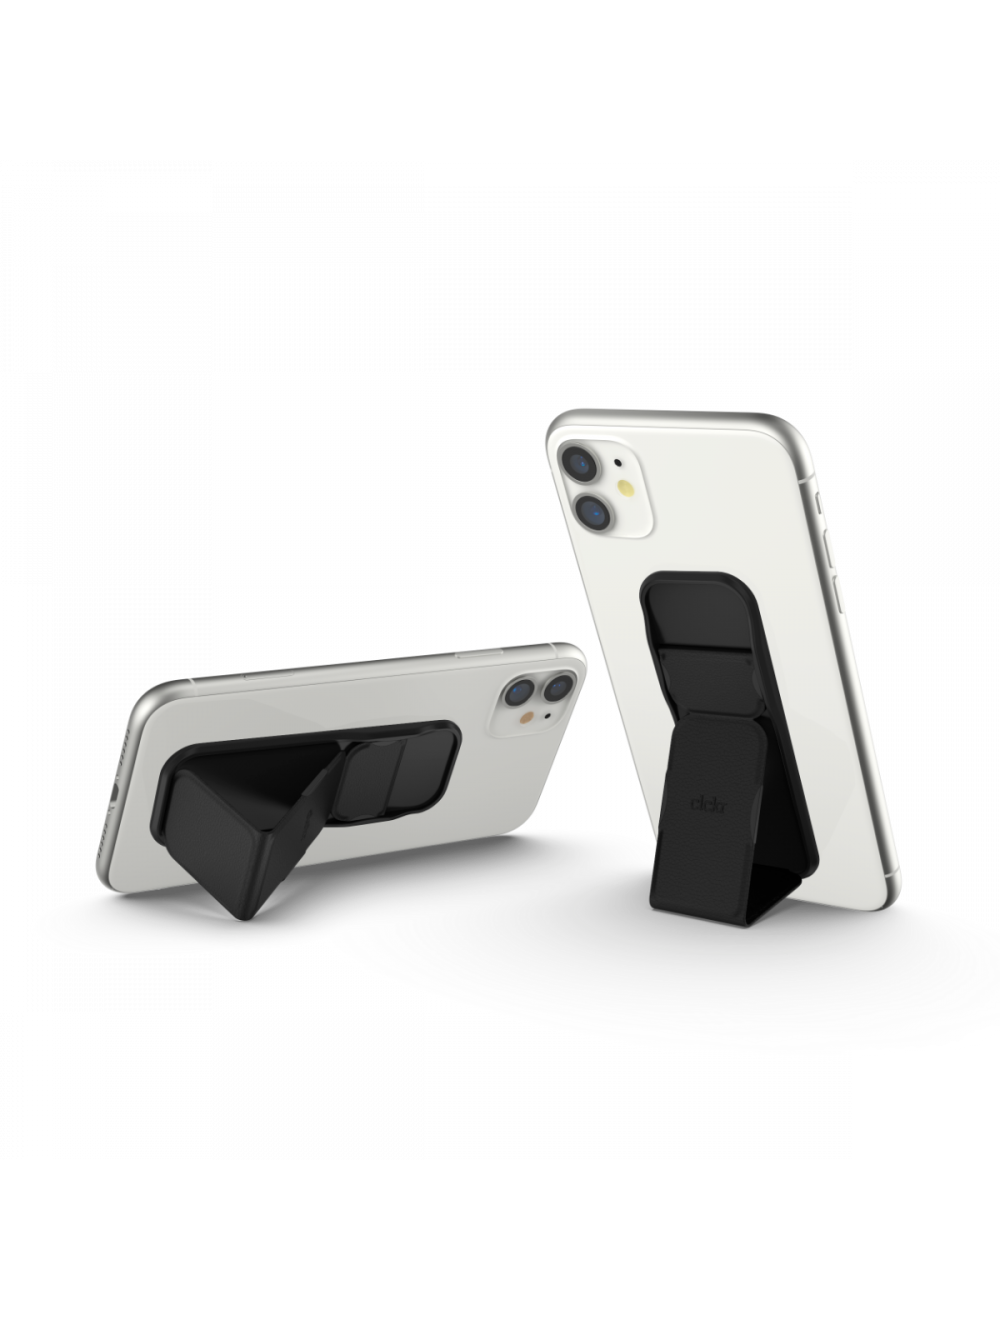 Smooth Universal Phone Stand & Grip - Black